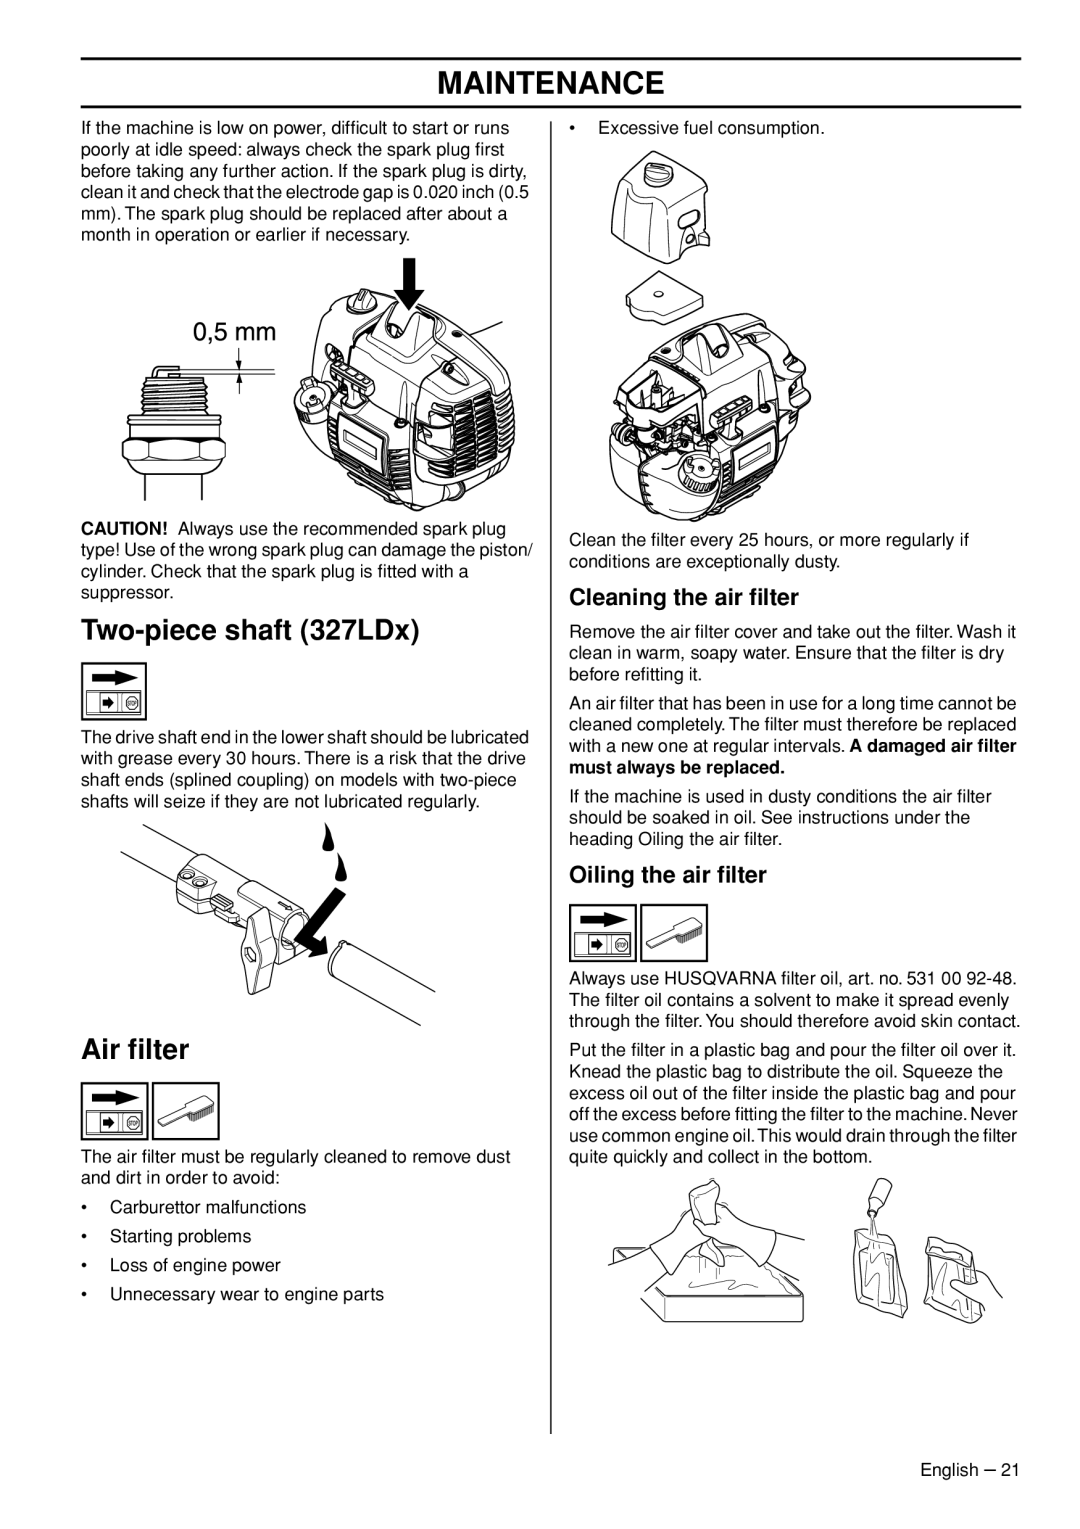 Husqvarna 327LS manual Two-pieceshaft 327LDx, Air ﬁlter, Cleaning the air ﬁlter, Oiling the air ﬁlter, Maintenance 